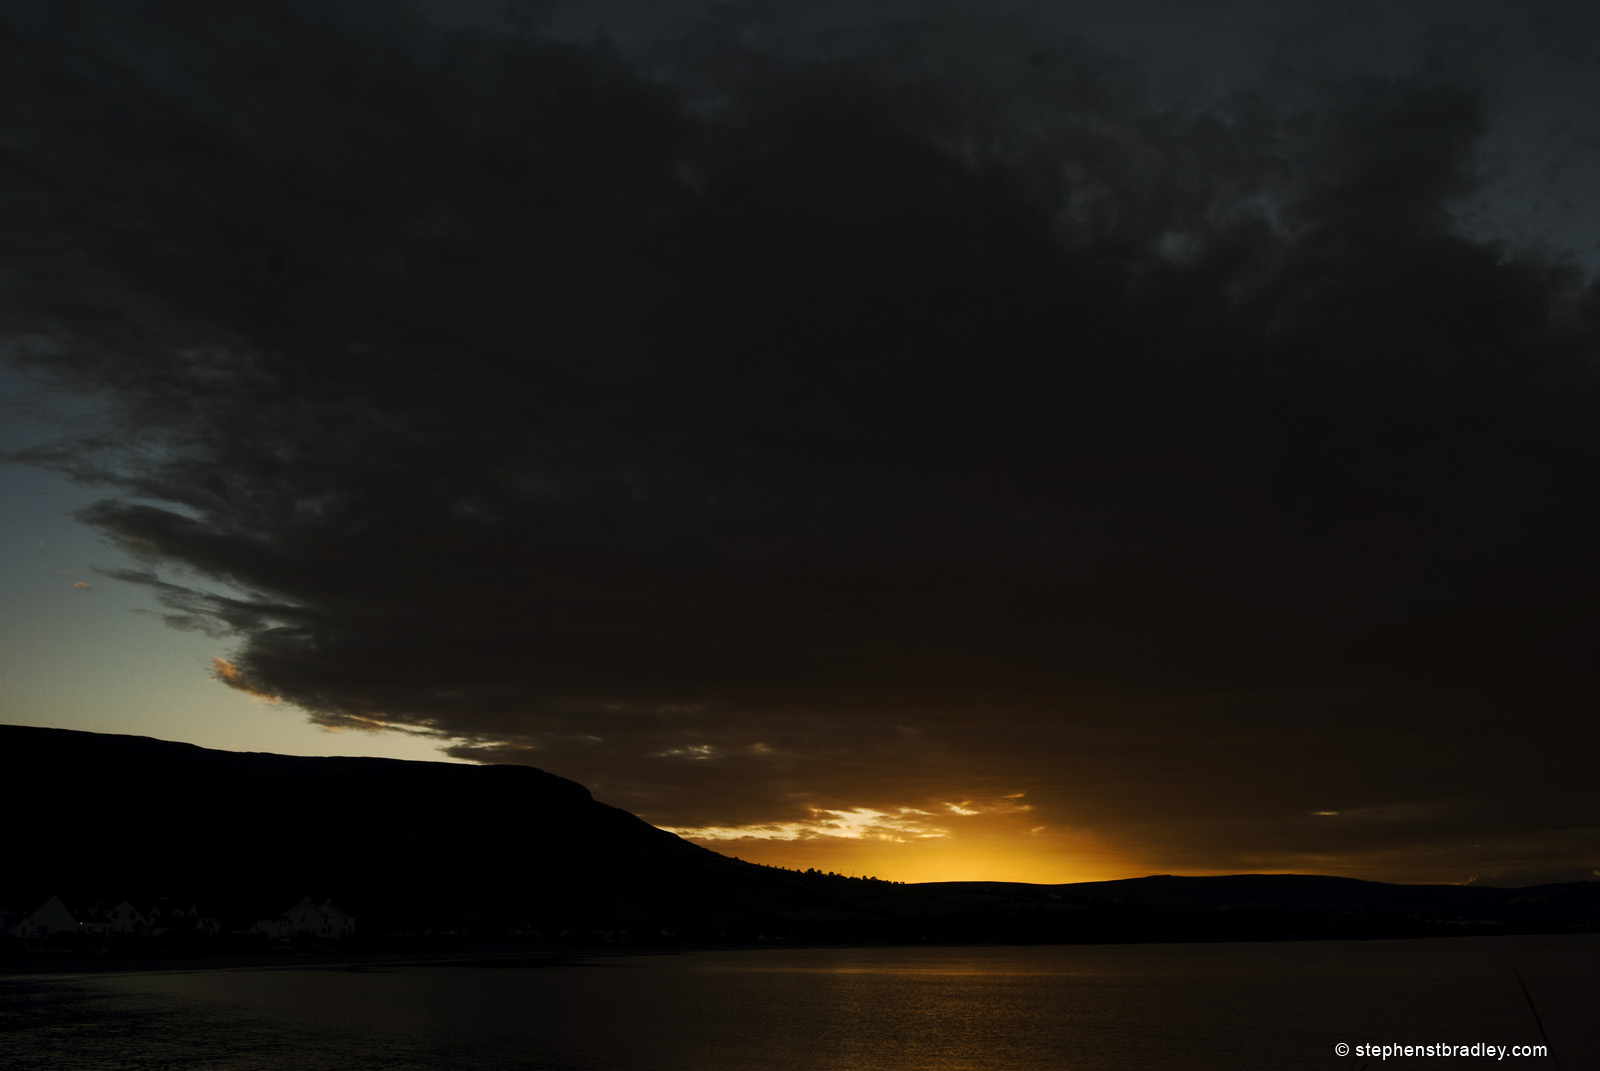 Landscape photograph of sun setting behind Tievebulliagh, Glens of Antrim, Northern Ireland, by Stephen Bradley photographer - photograph 2579.